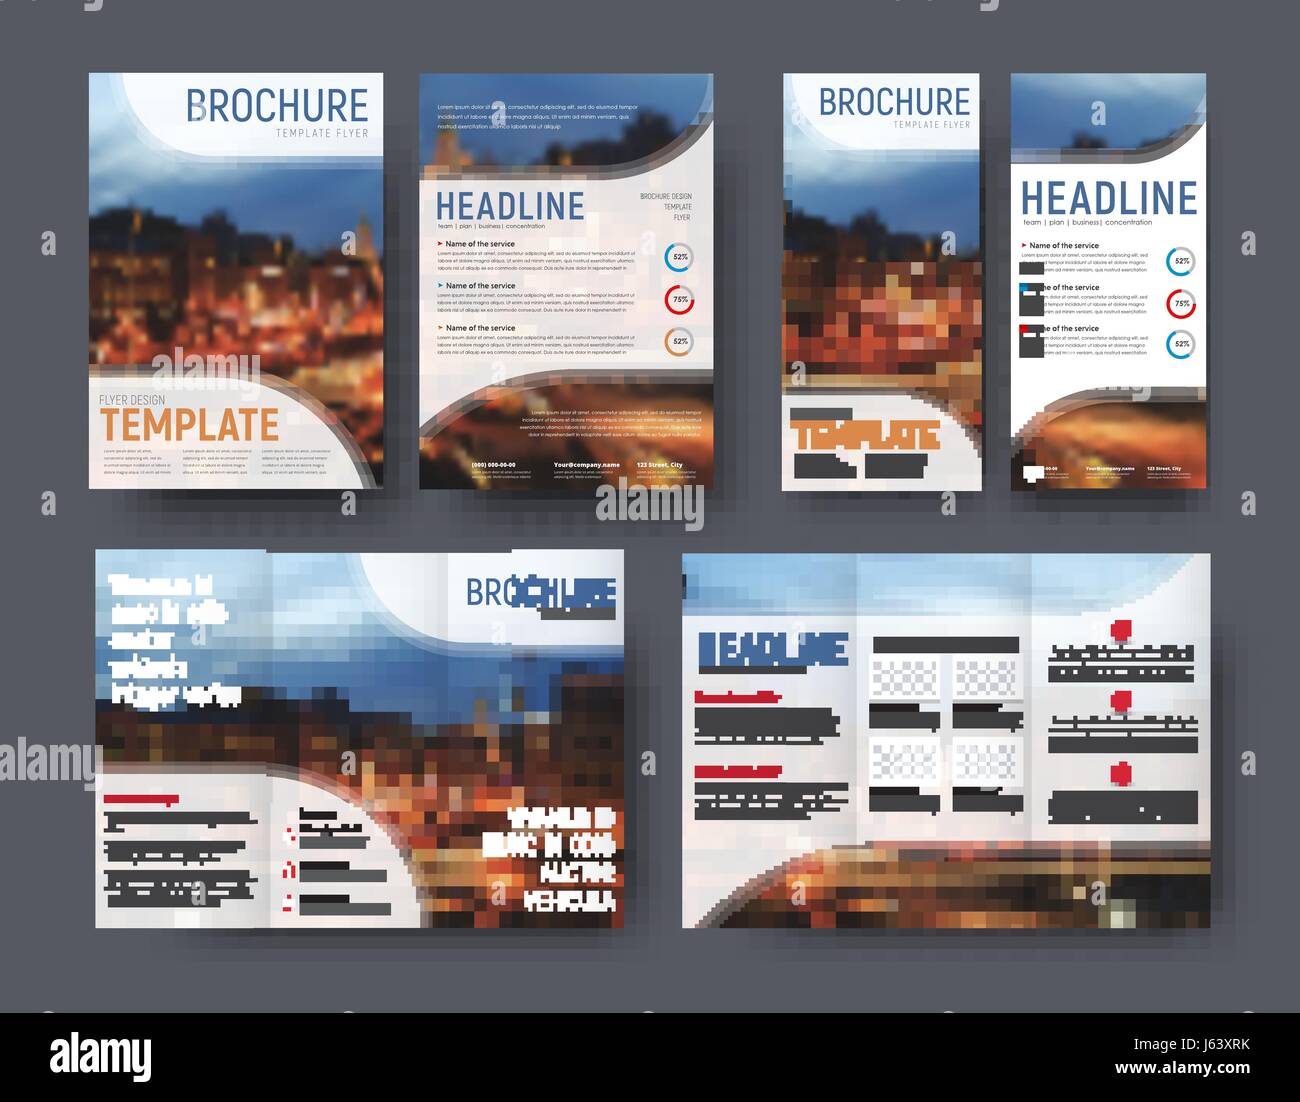 a4 brochure template